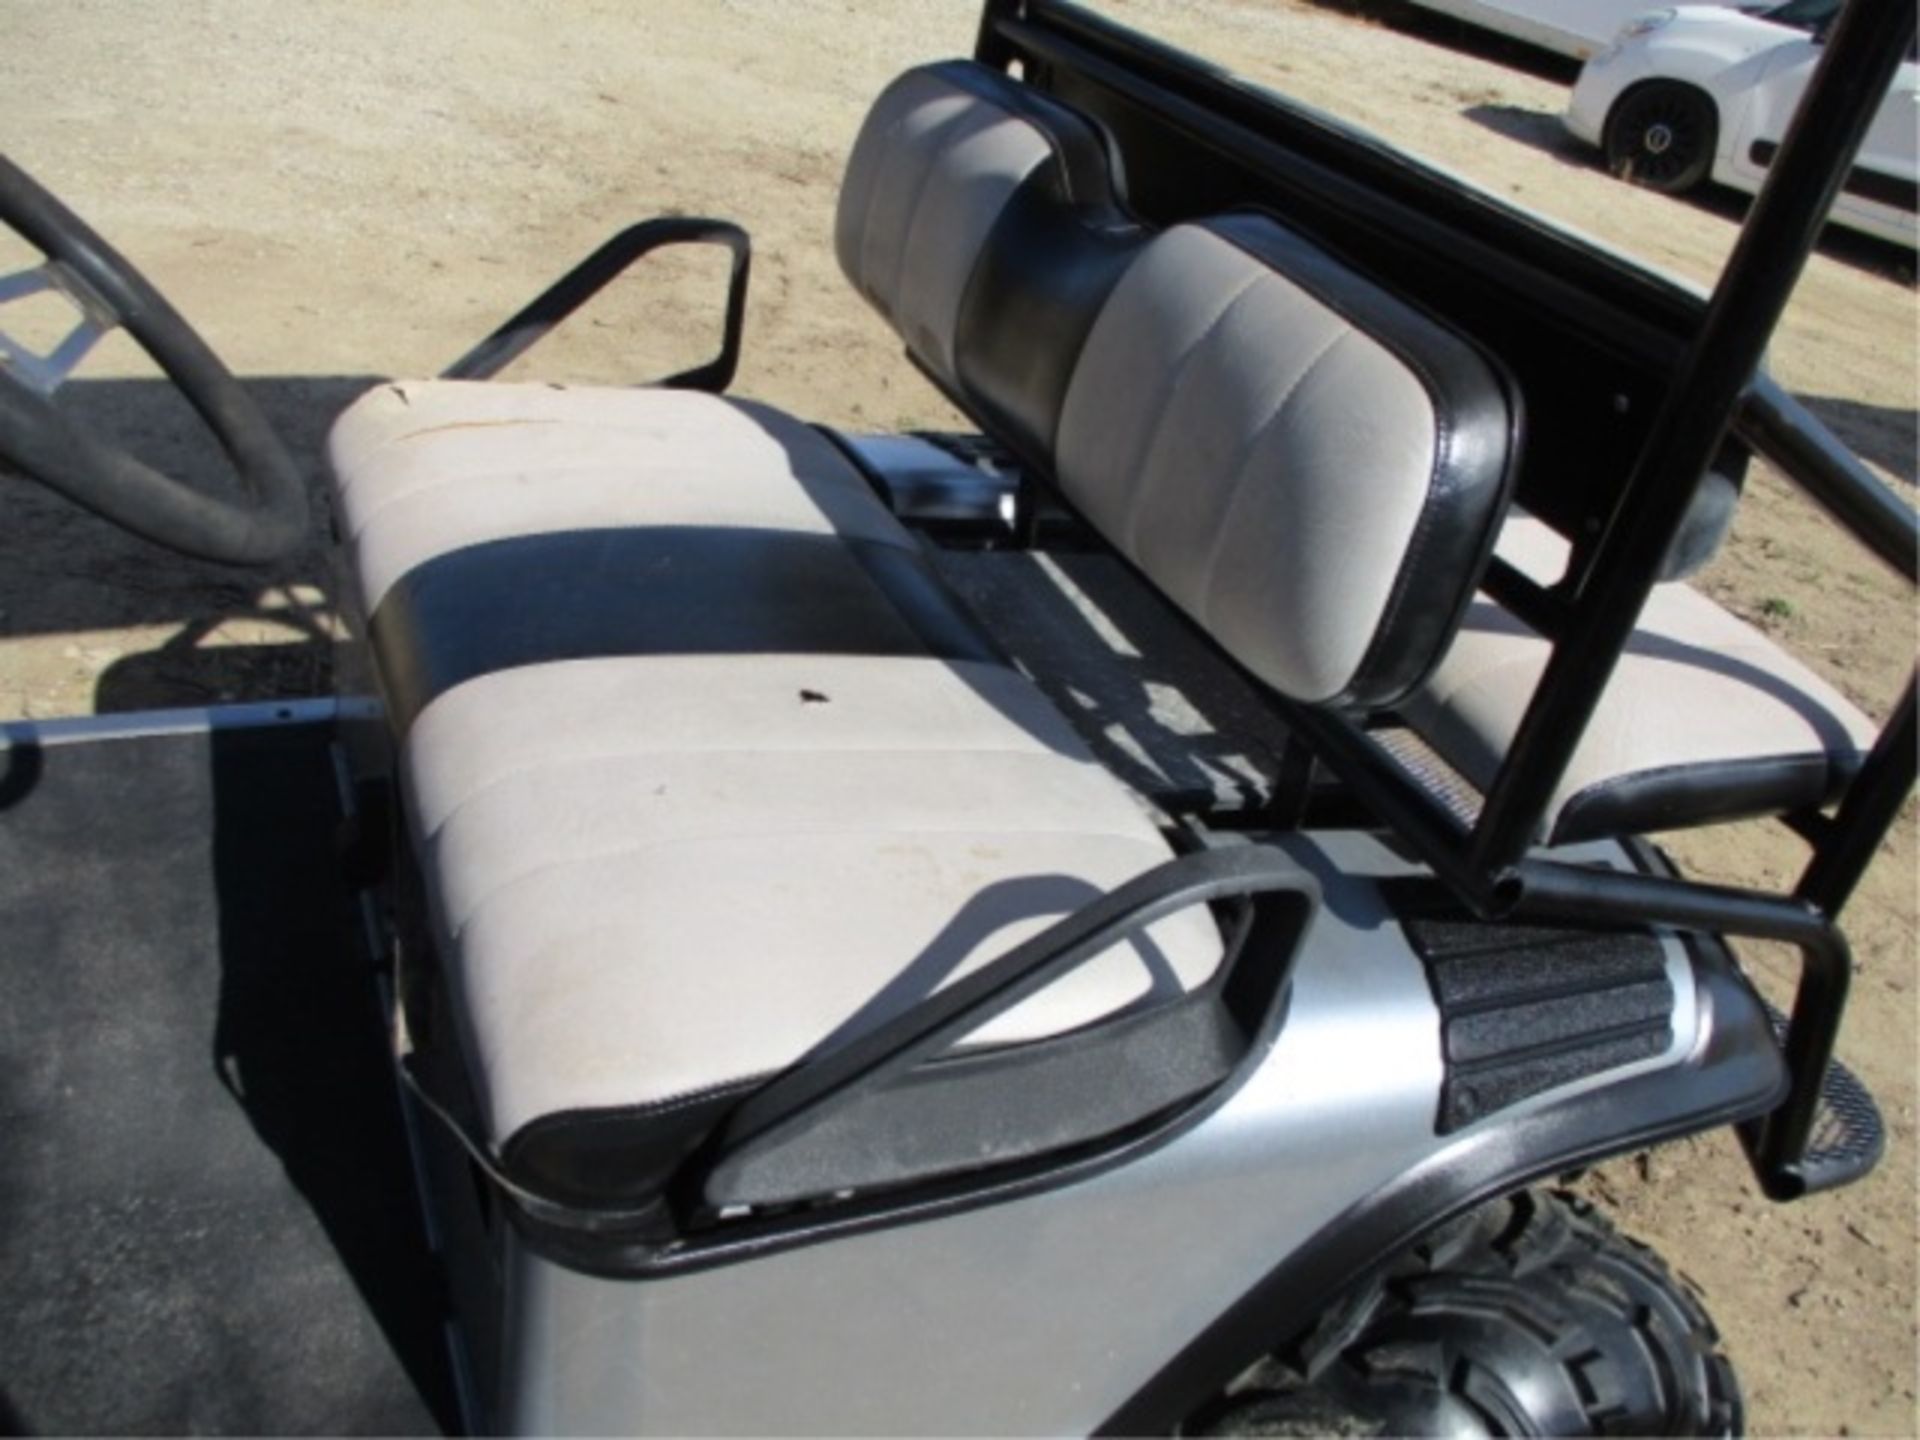 EzGo Golf Cart, 2017 Predator 670cc Gas Engine, Lift Kit, Custom Roll-Cage W/Canopy, S/N: 912224 - Image 18 of 39